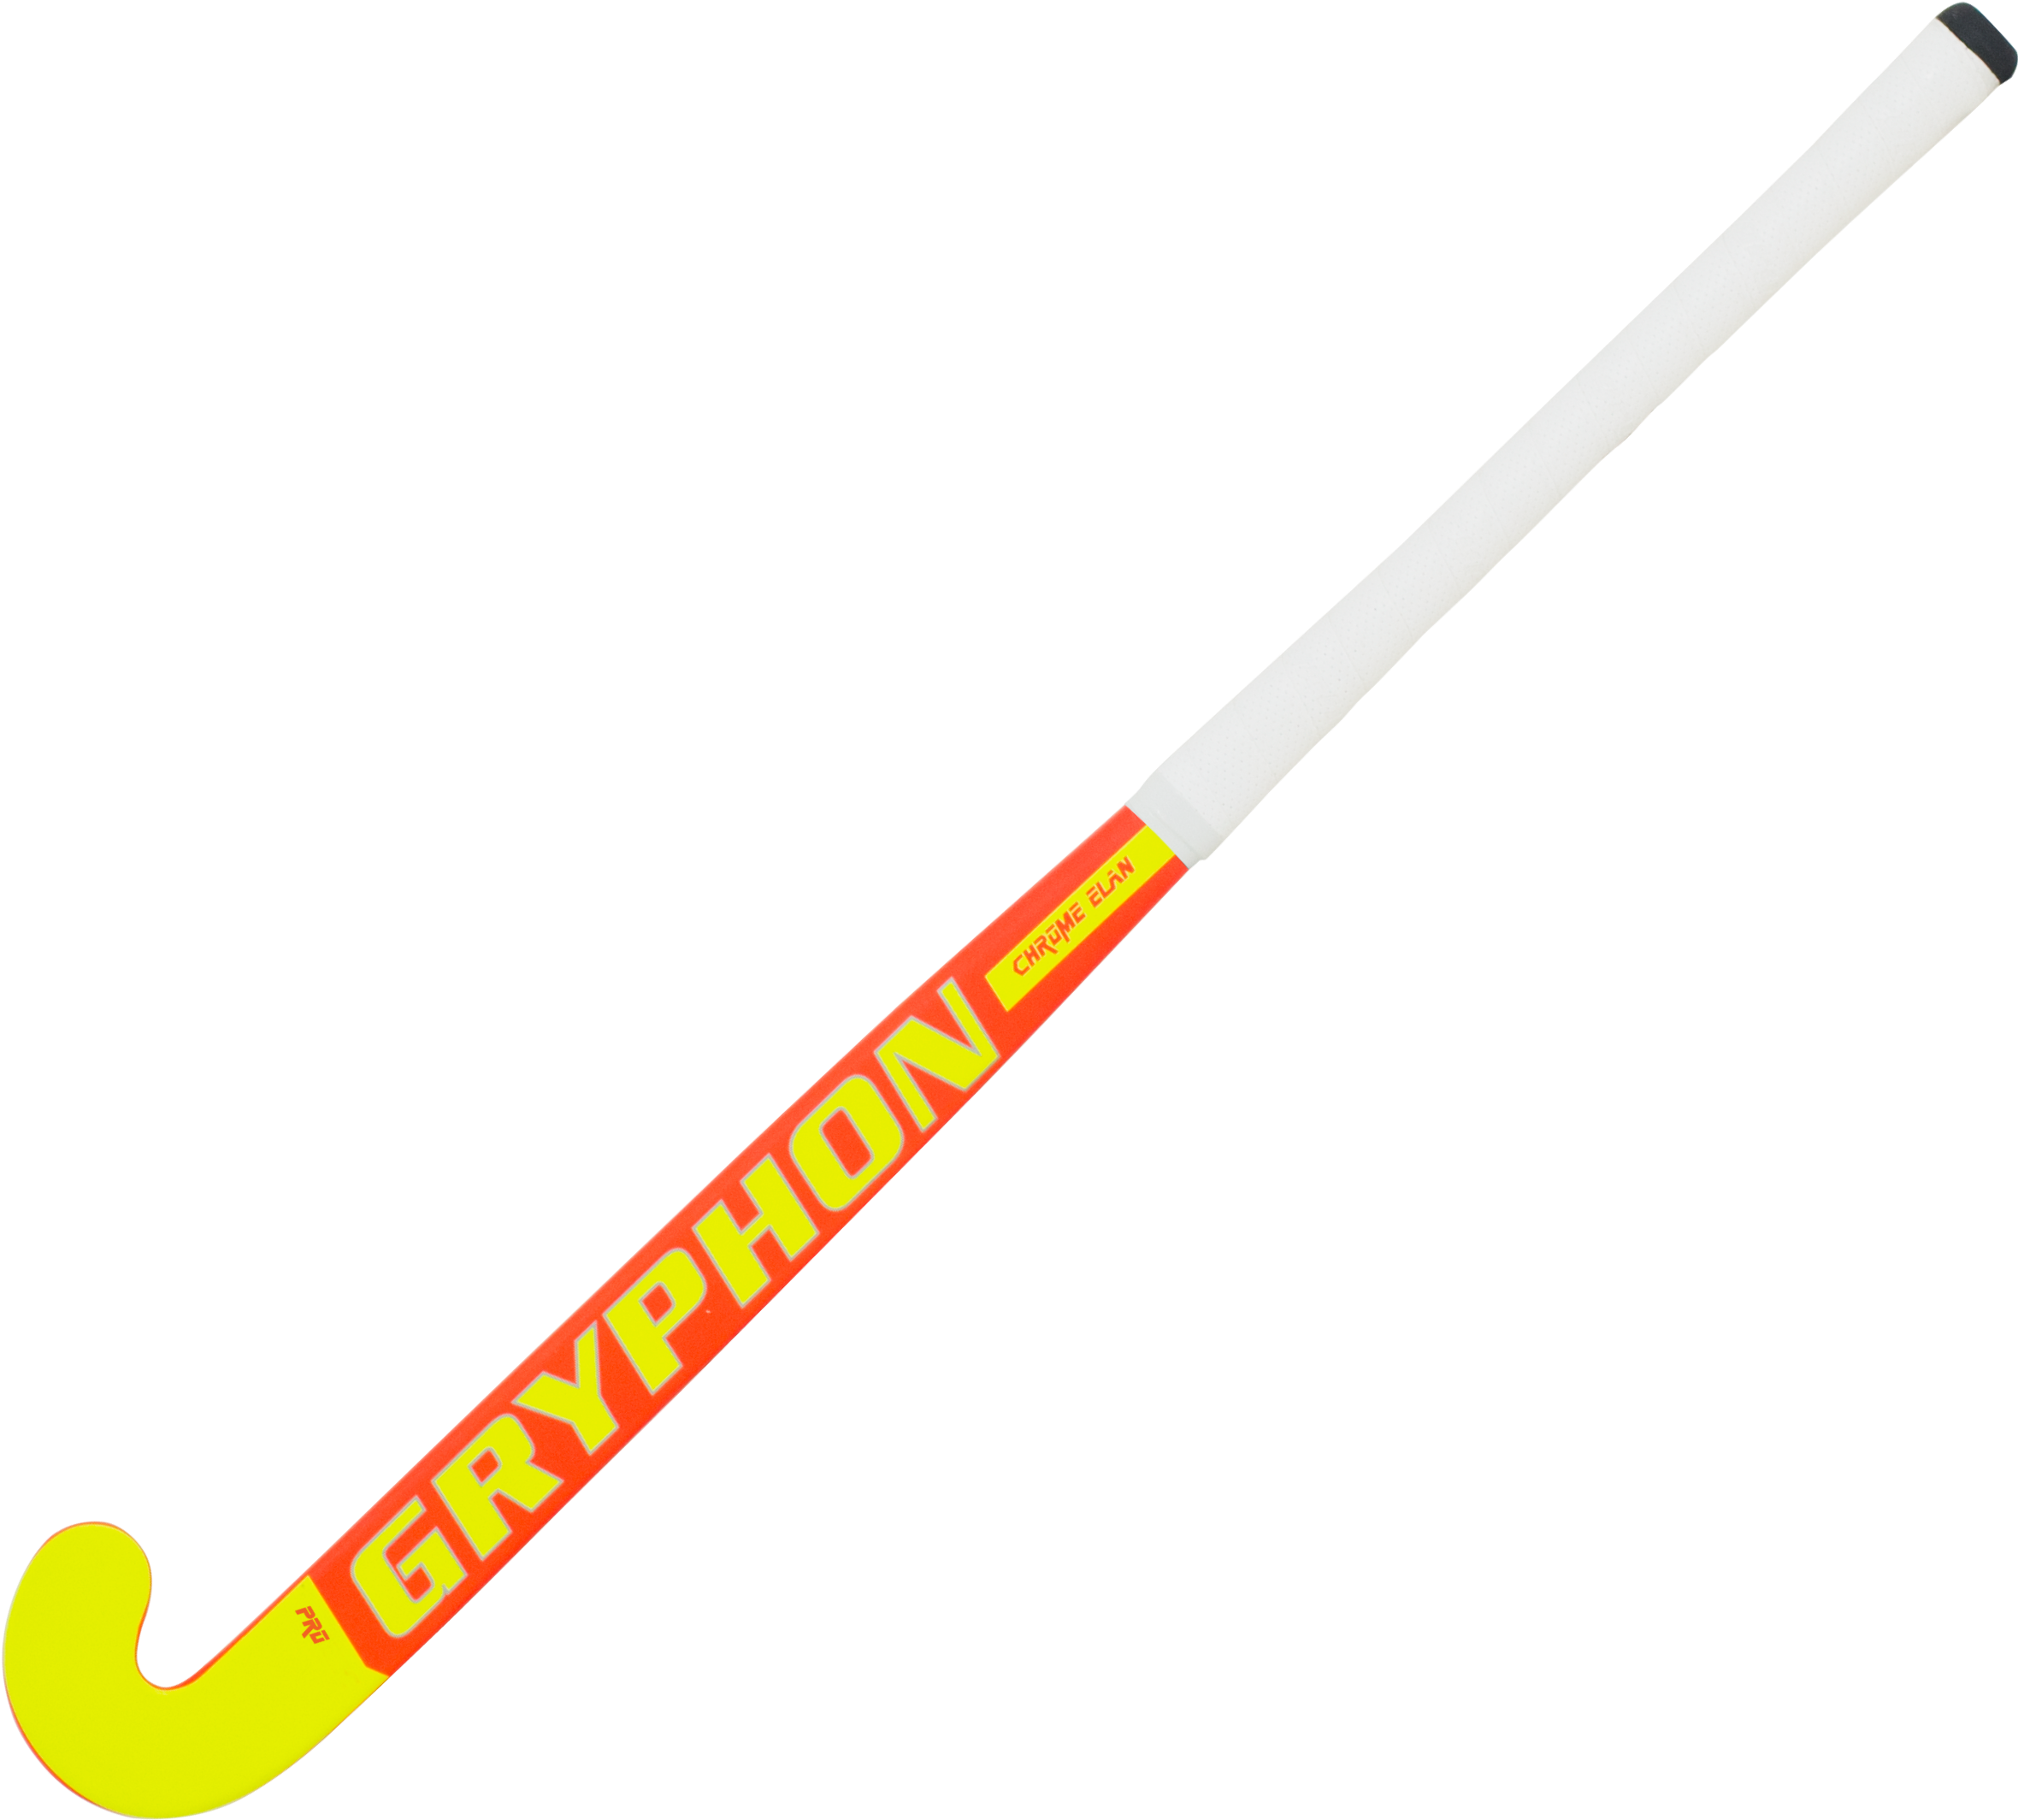 Gryphon Hockey Stick Bat And Ball Games